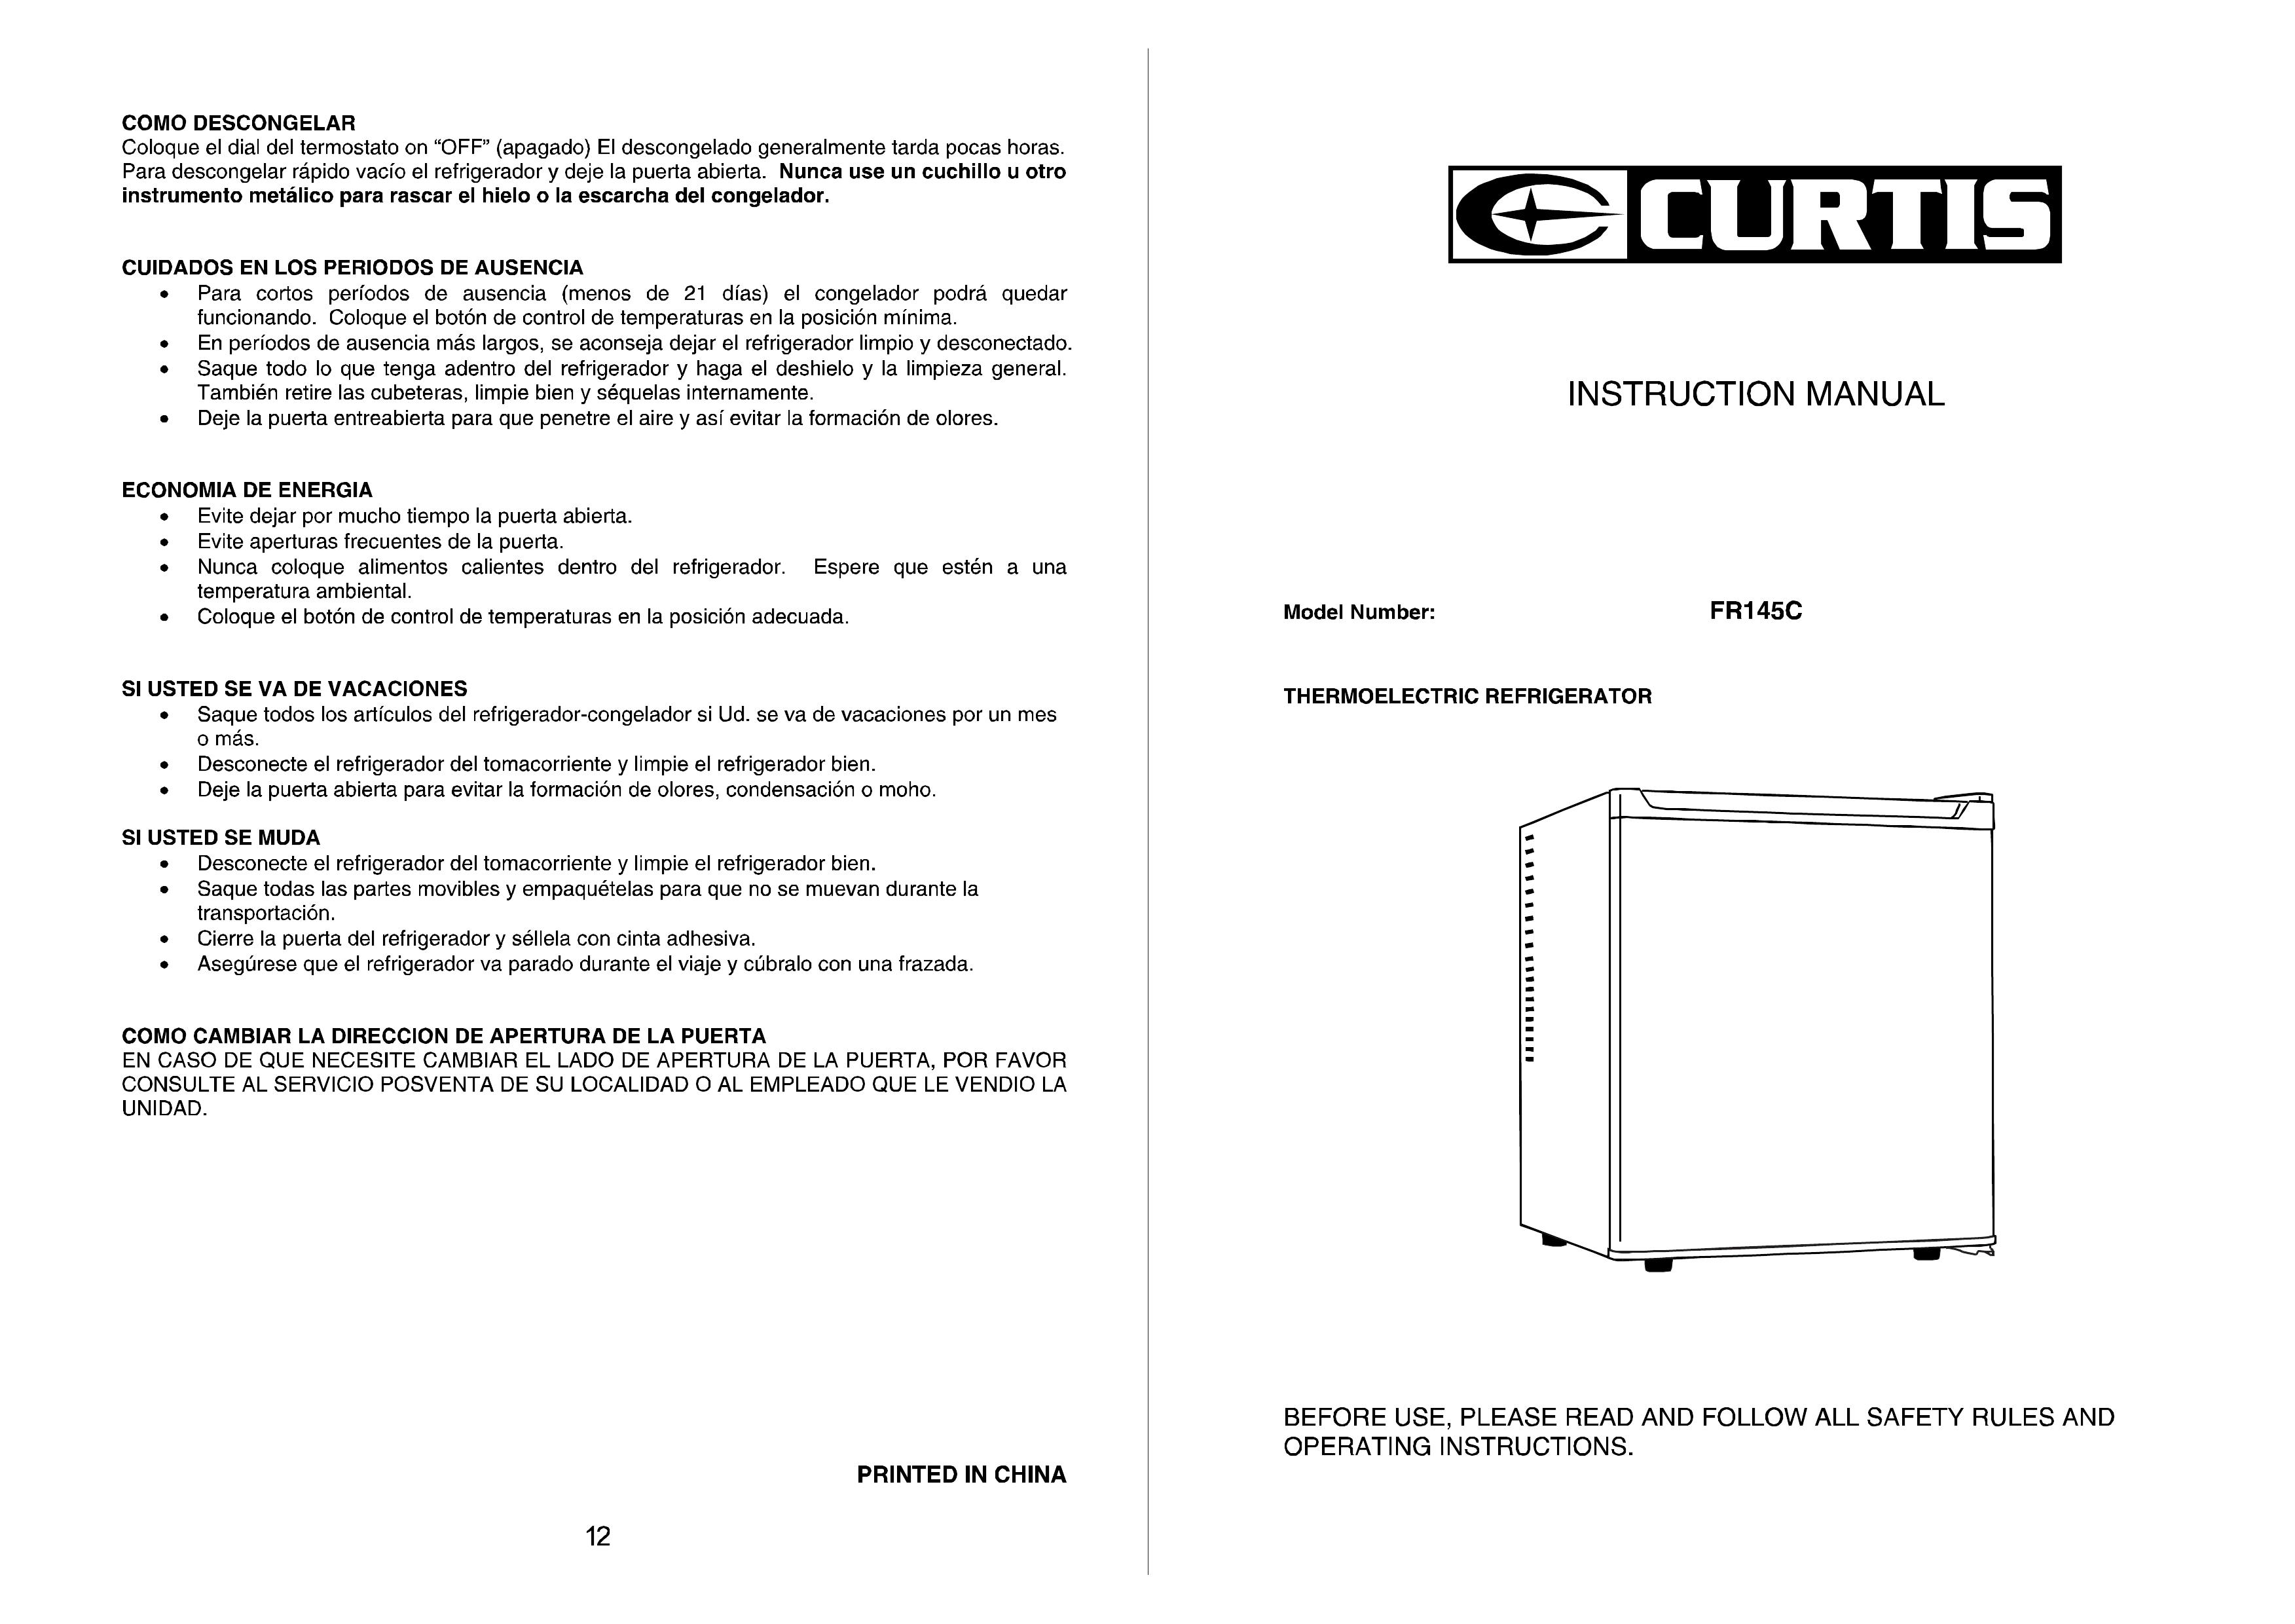 Curtis FR145C Refrigerator User Manual